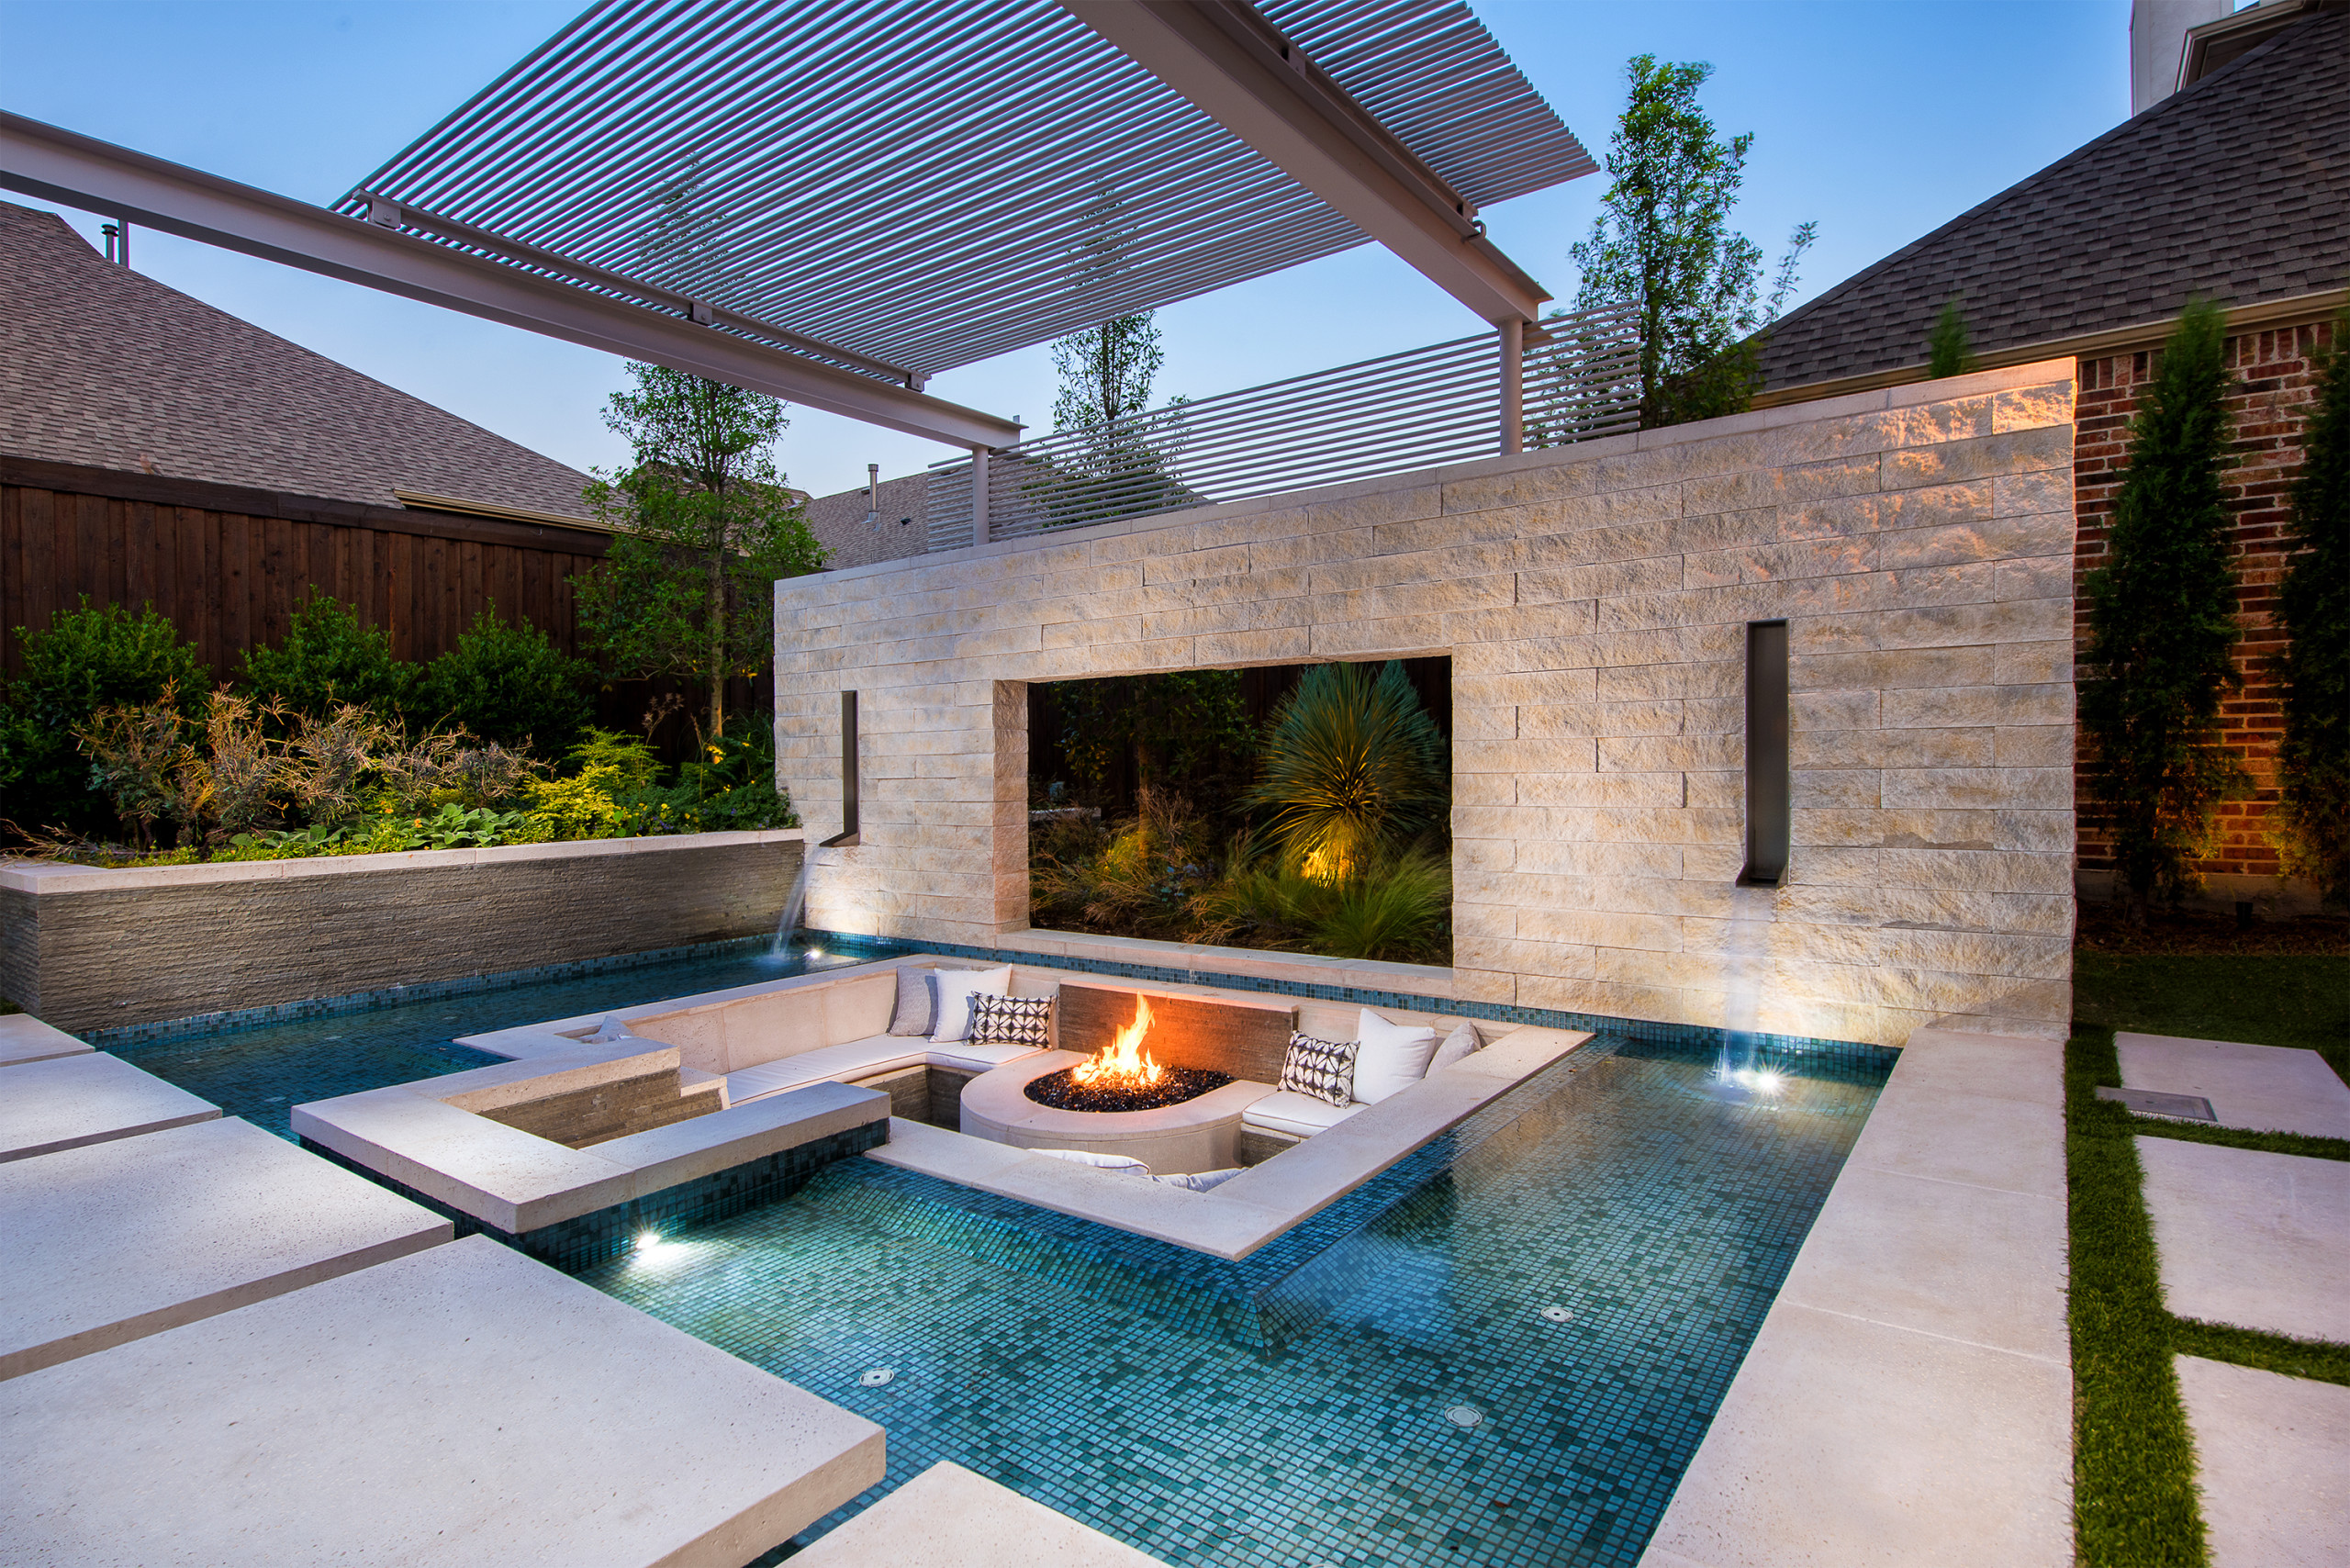 75 Courtyard Pool Ideas You Ll Love